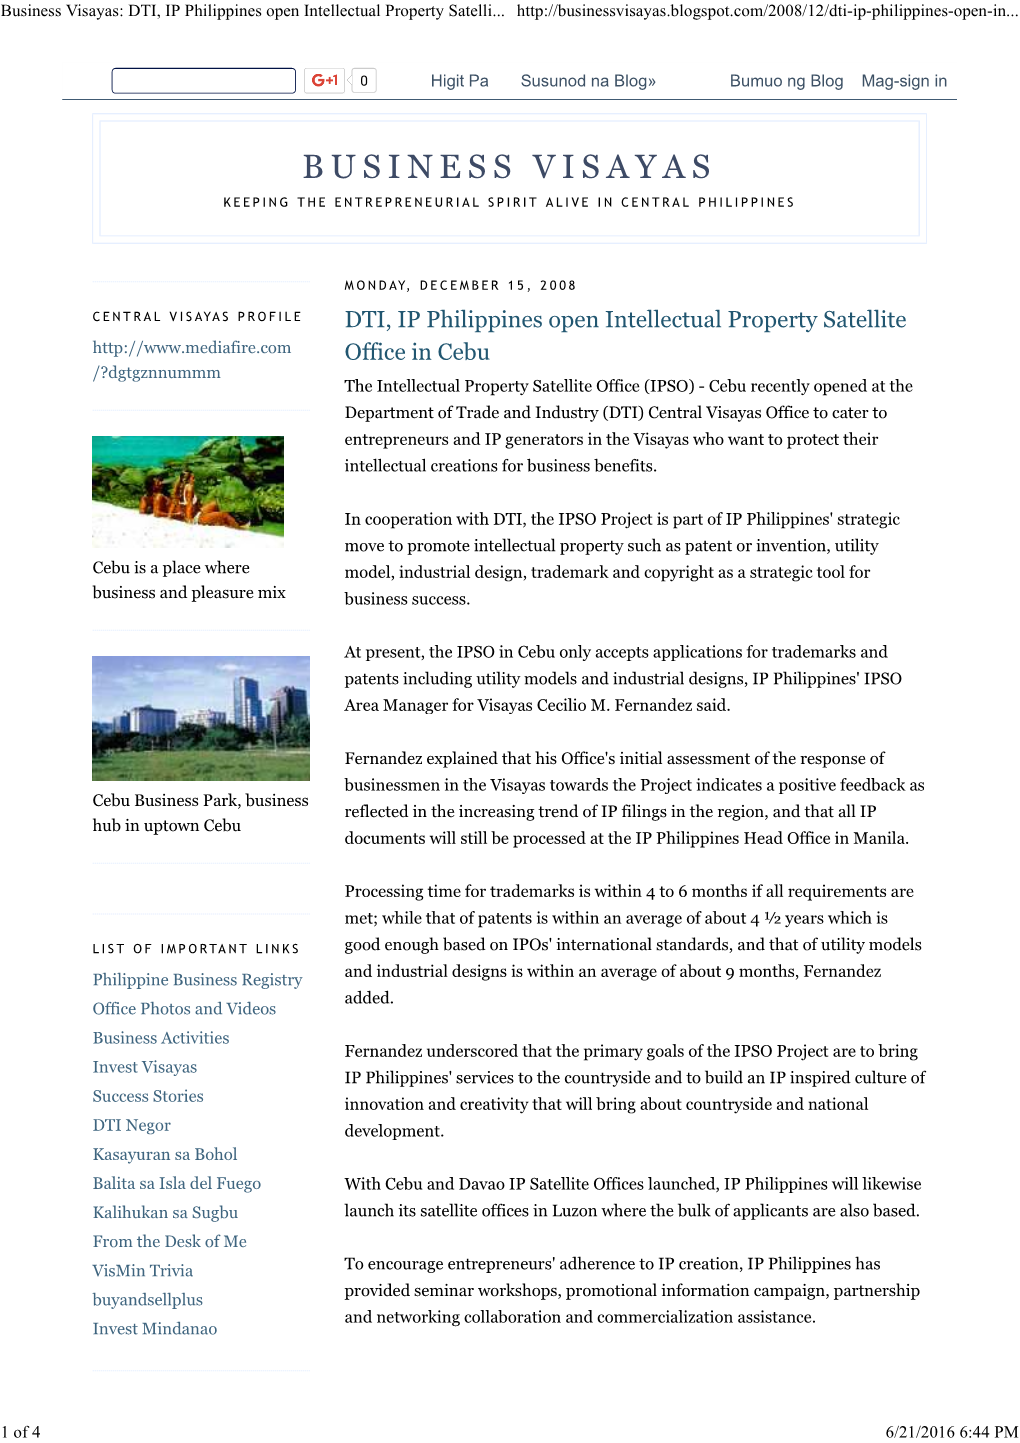 Business Visayas: DTI, IP Philippines Open Intellectual Property Satellite